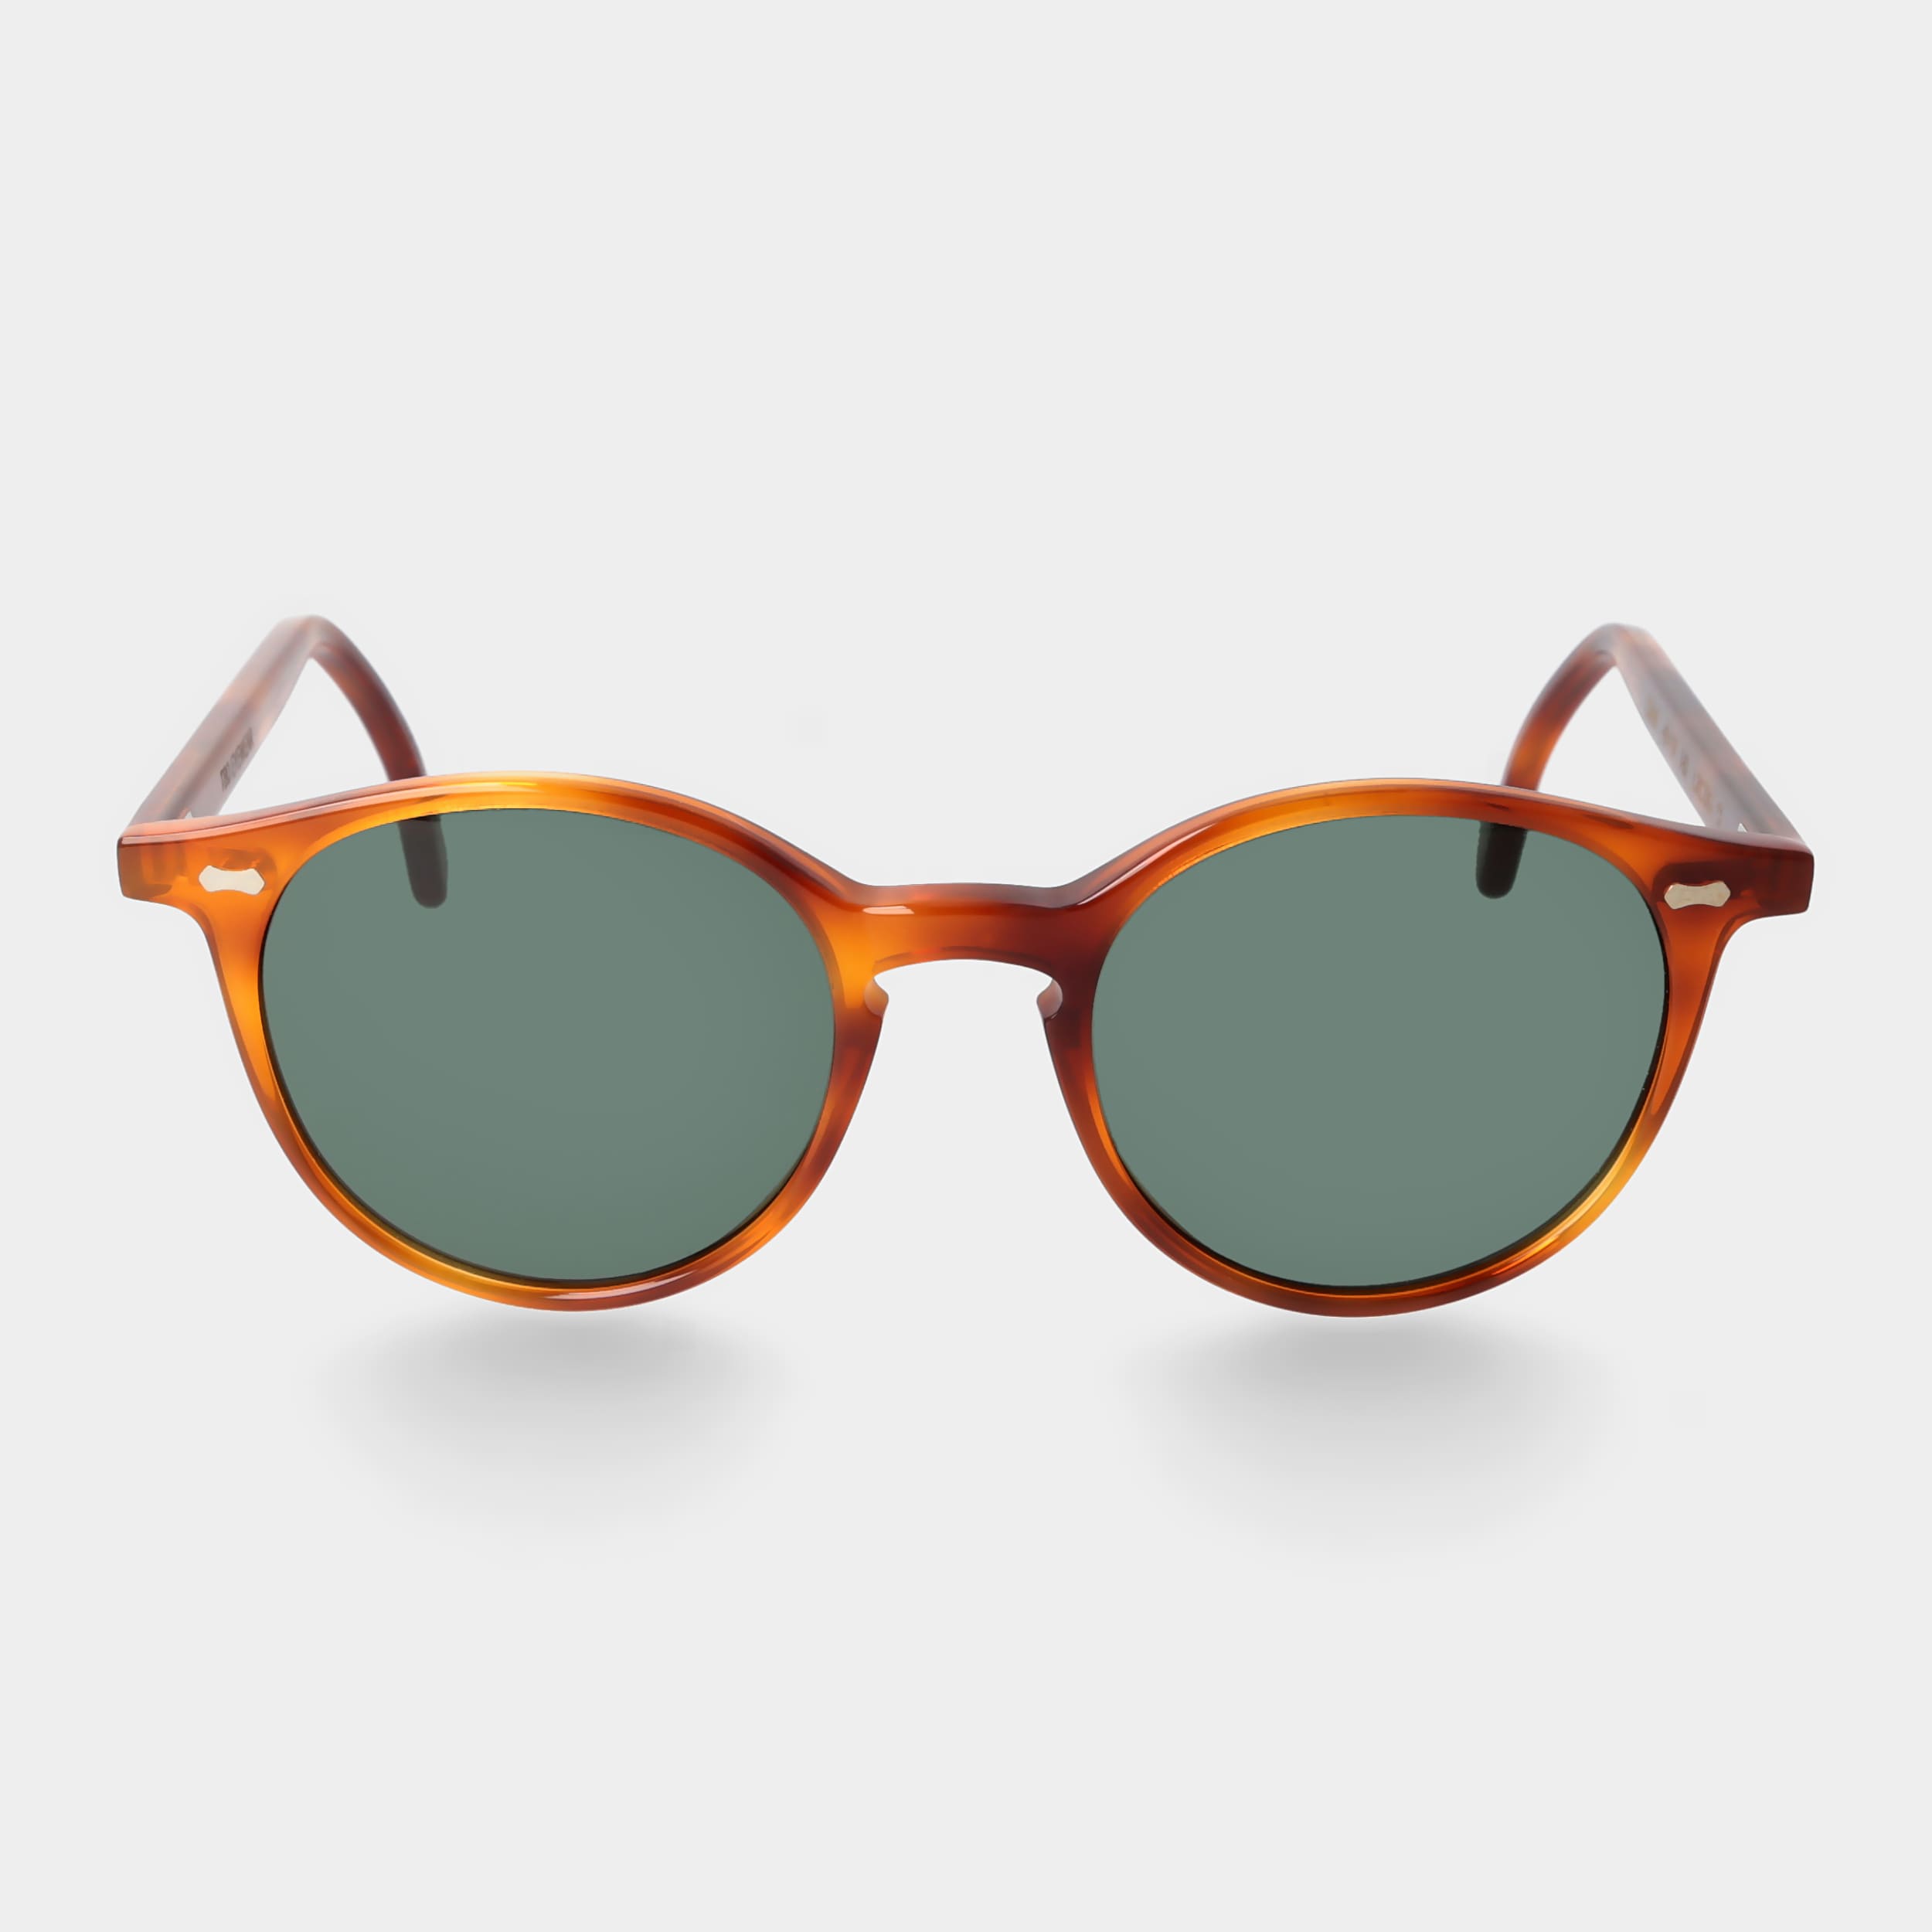 sunglasses-cran-classic-tortoise-bottle-green-tbd-eyewear-front